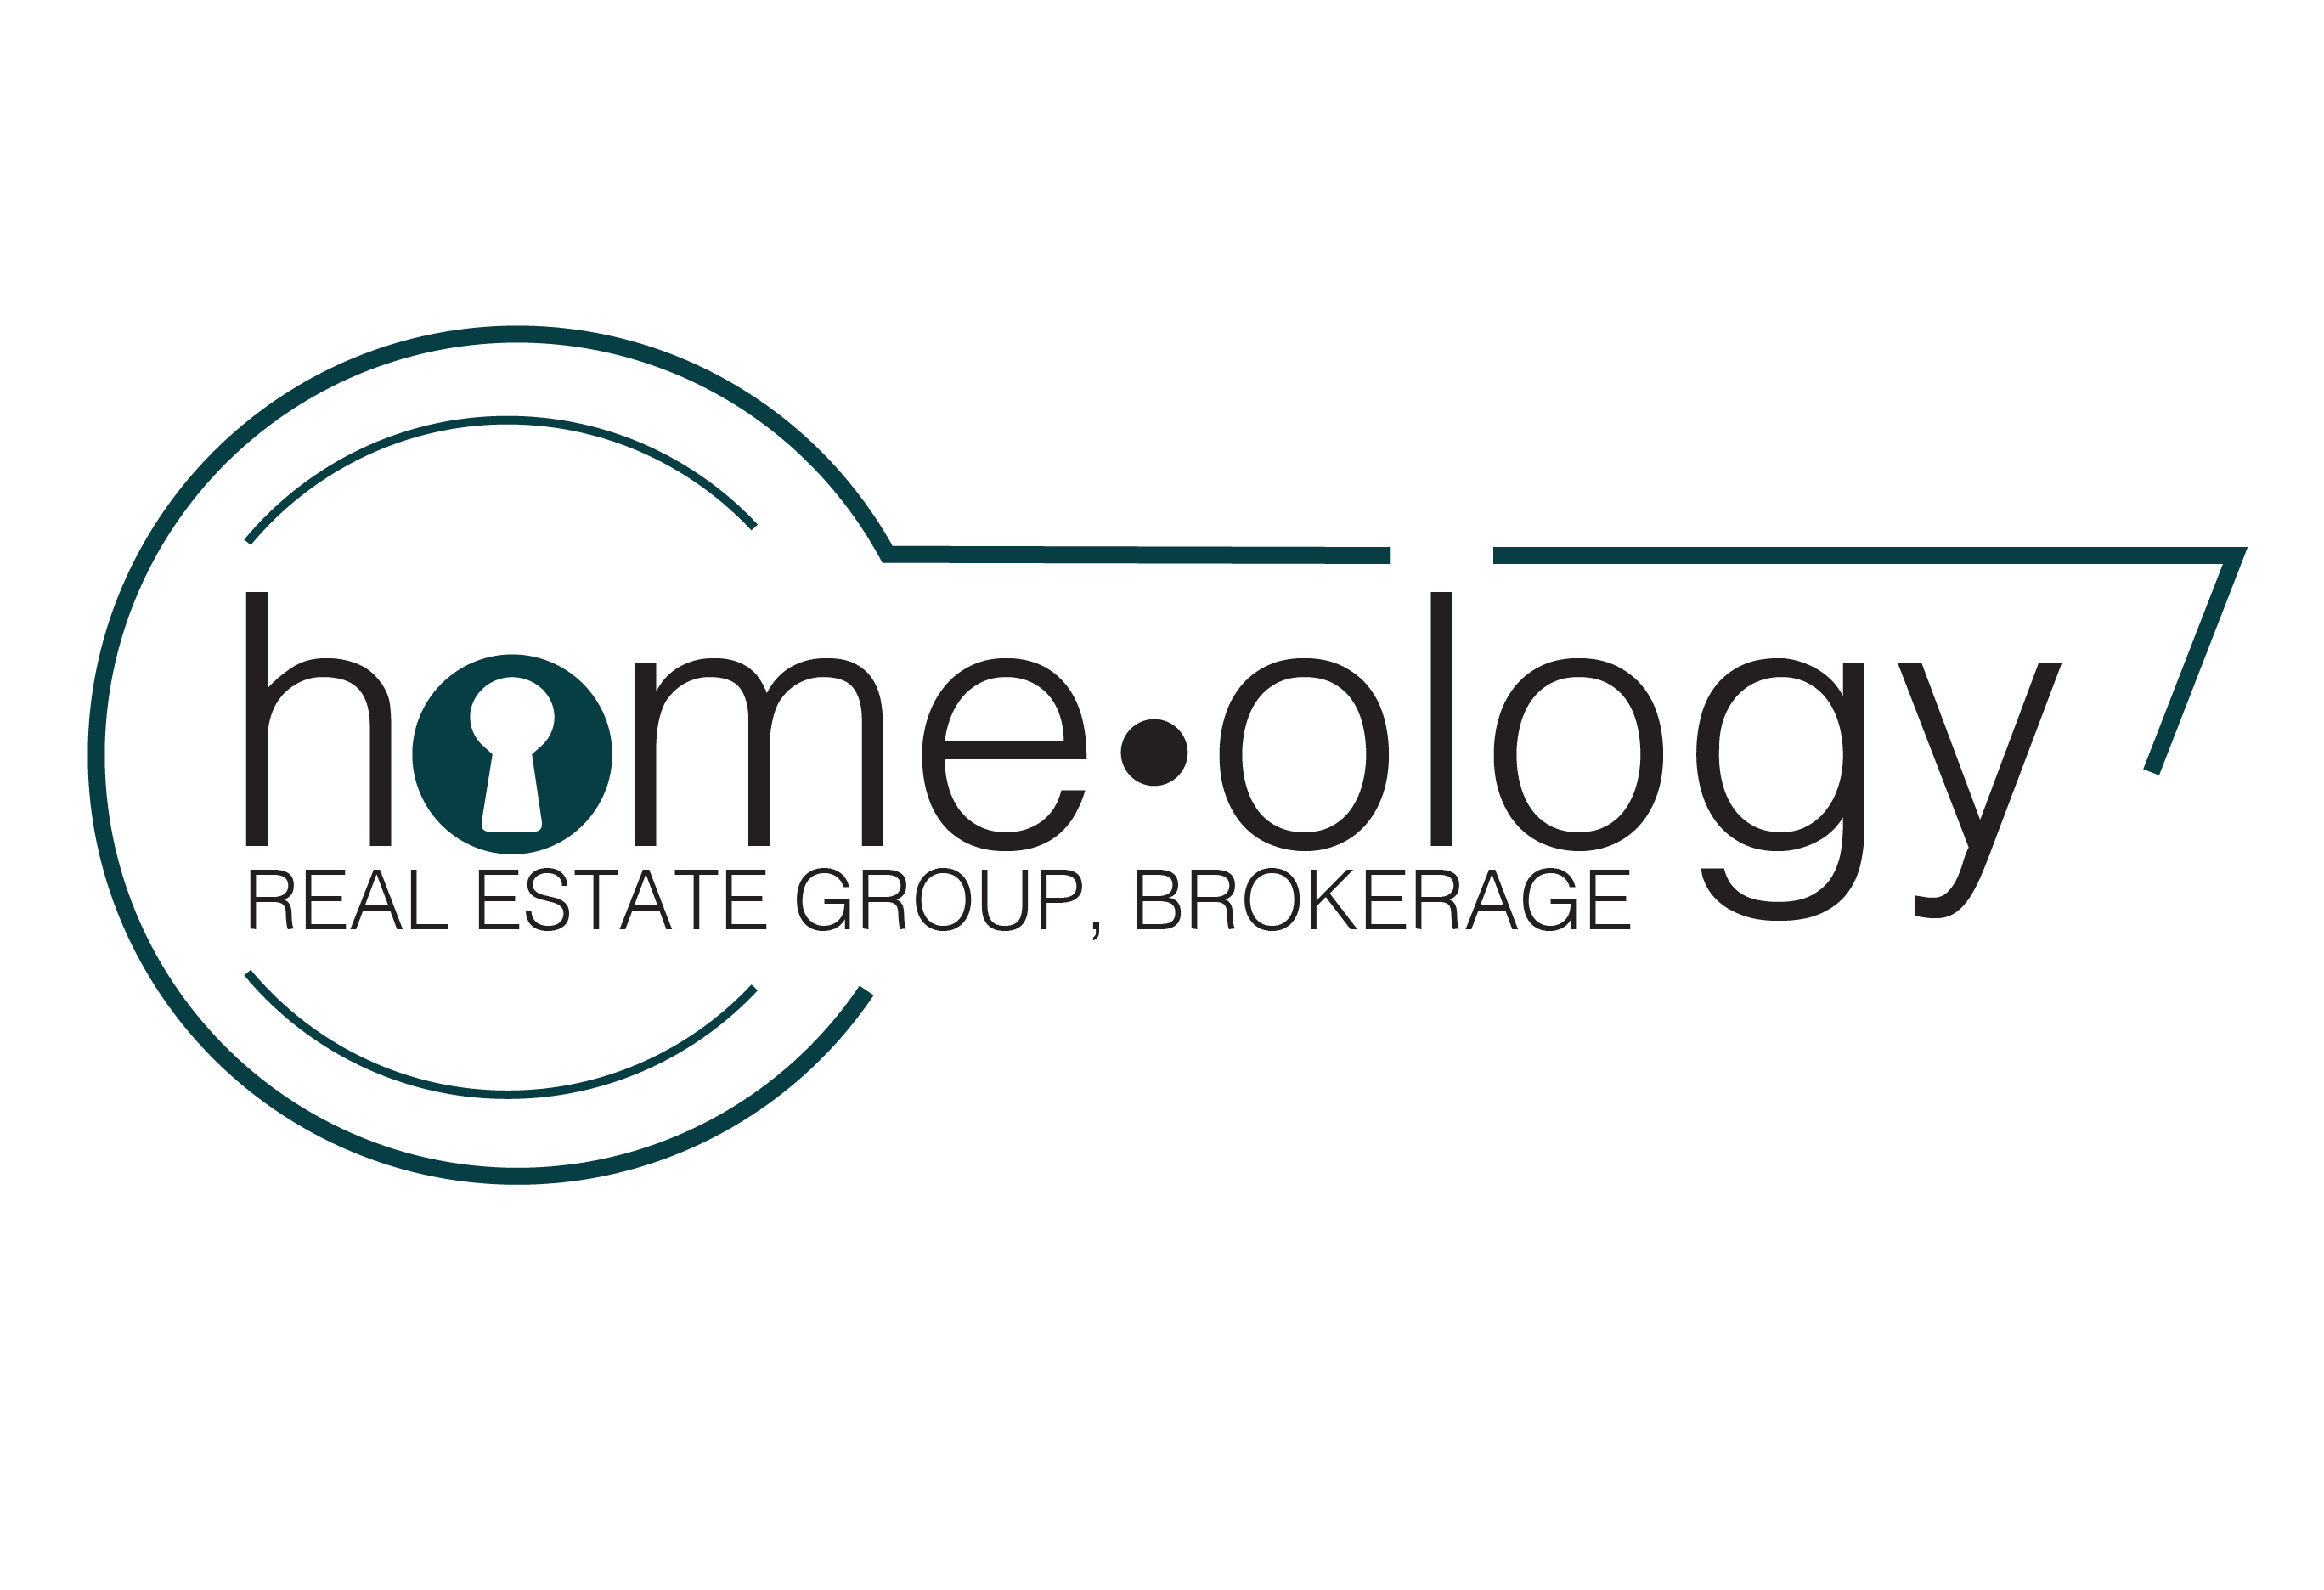 Homeology Real Estate Group